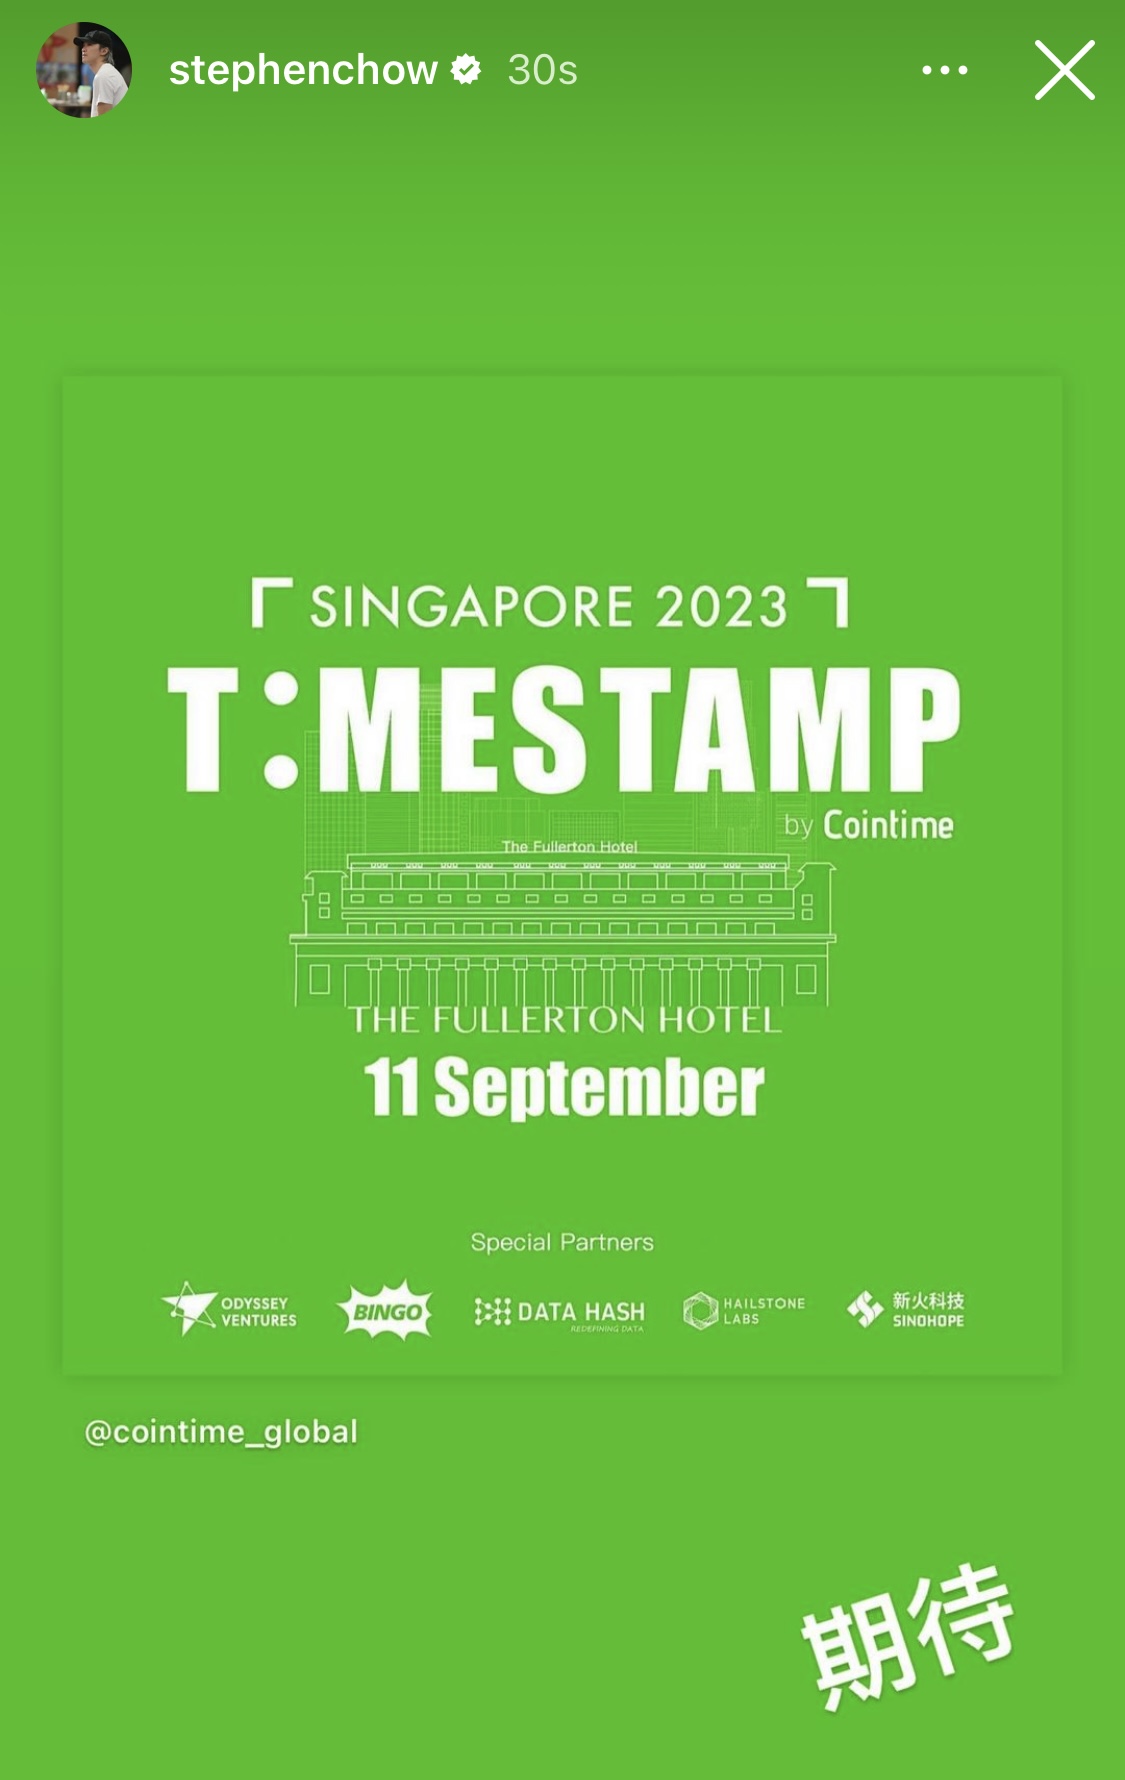 TimeStamp峰会将于9月11日召开，获周星驰旗下公司支持及本人Instagram转发